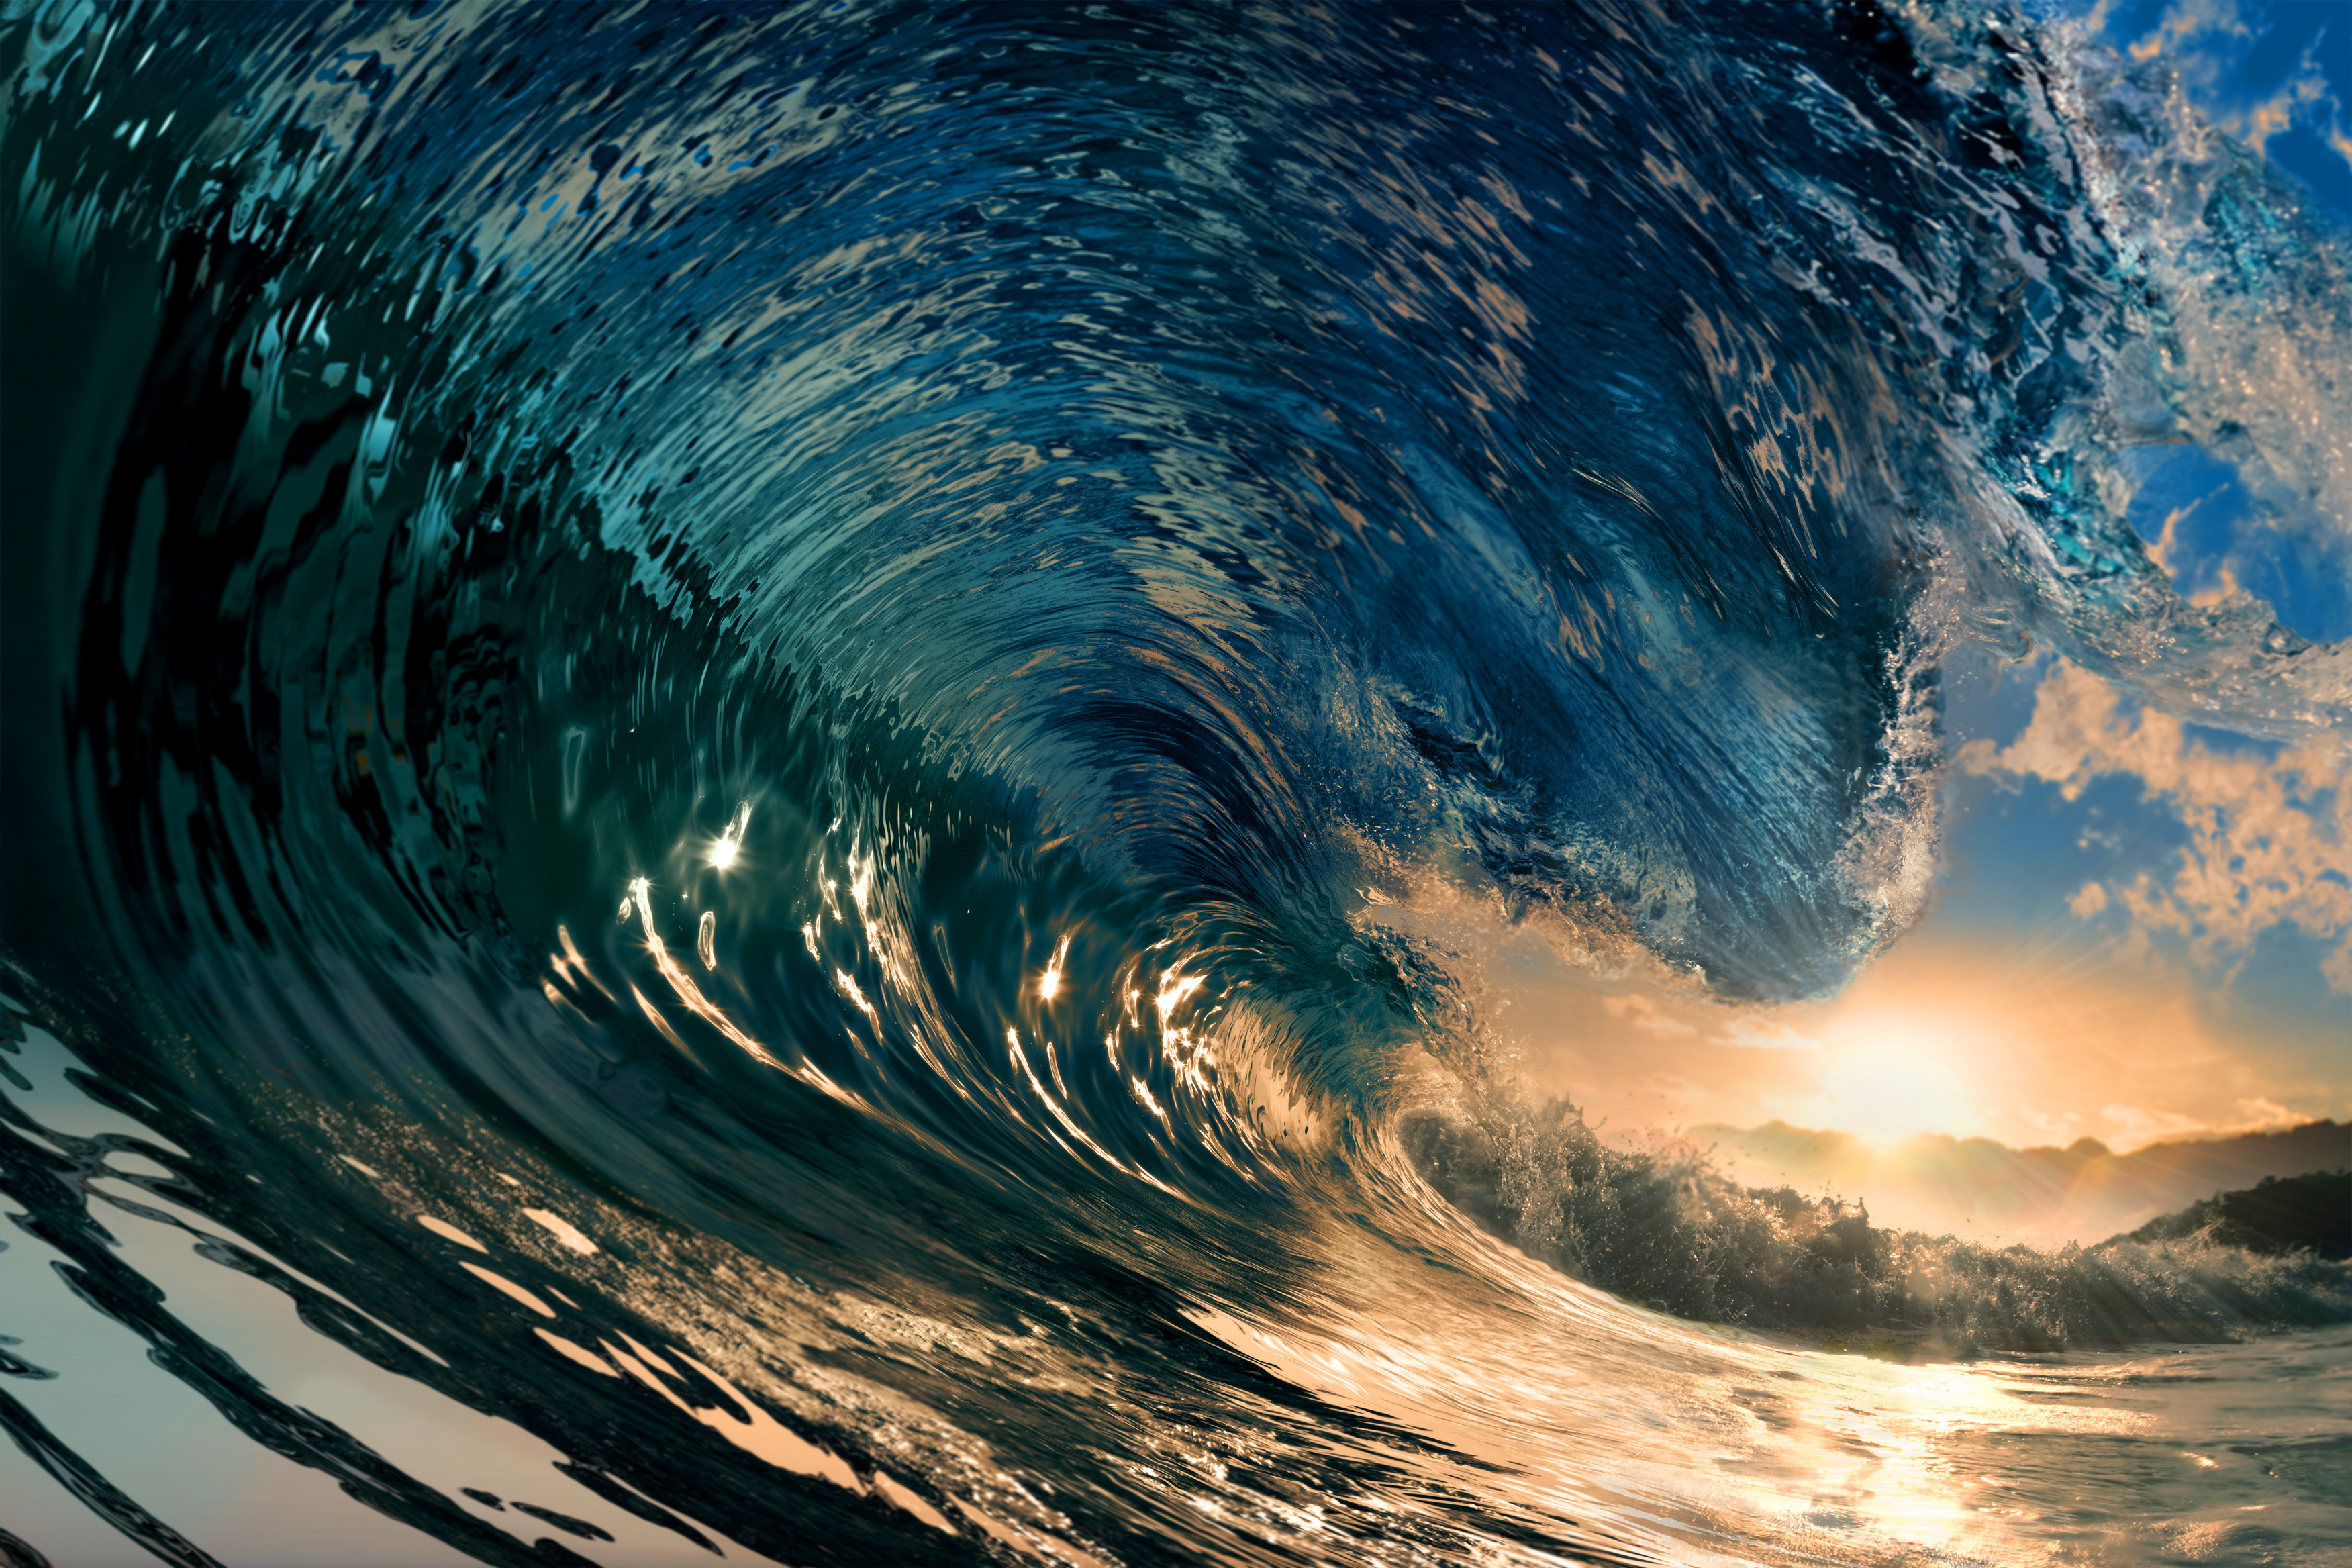 Large blue wave curling toward shore at sunset.